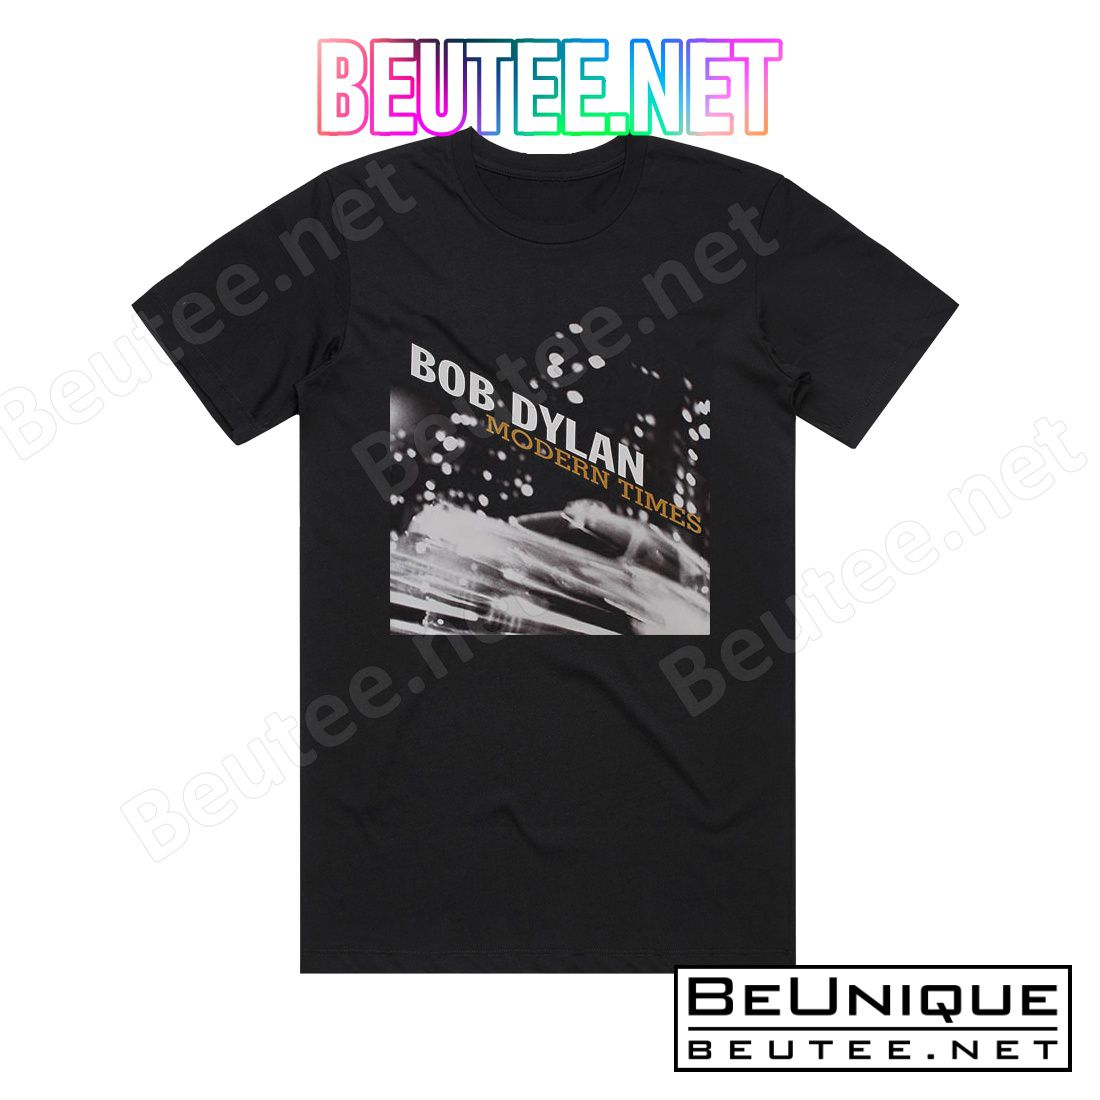 Bob Dylan Modern Times Album Cover T-Shirt